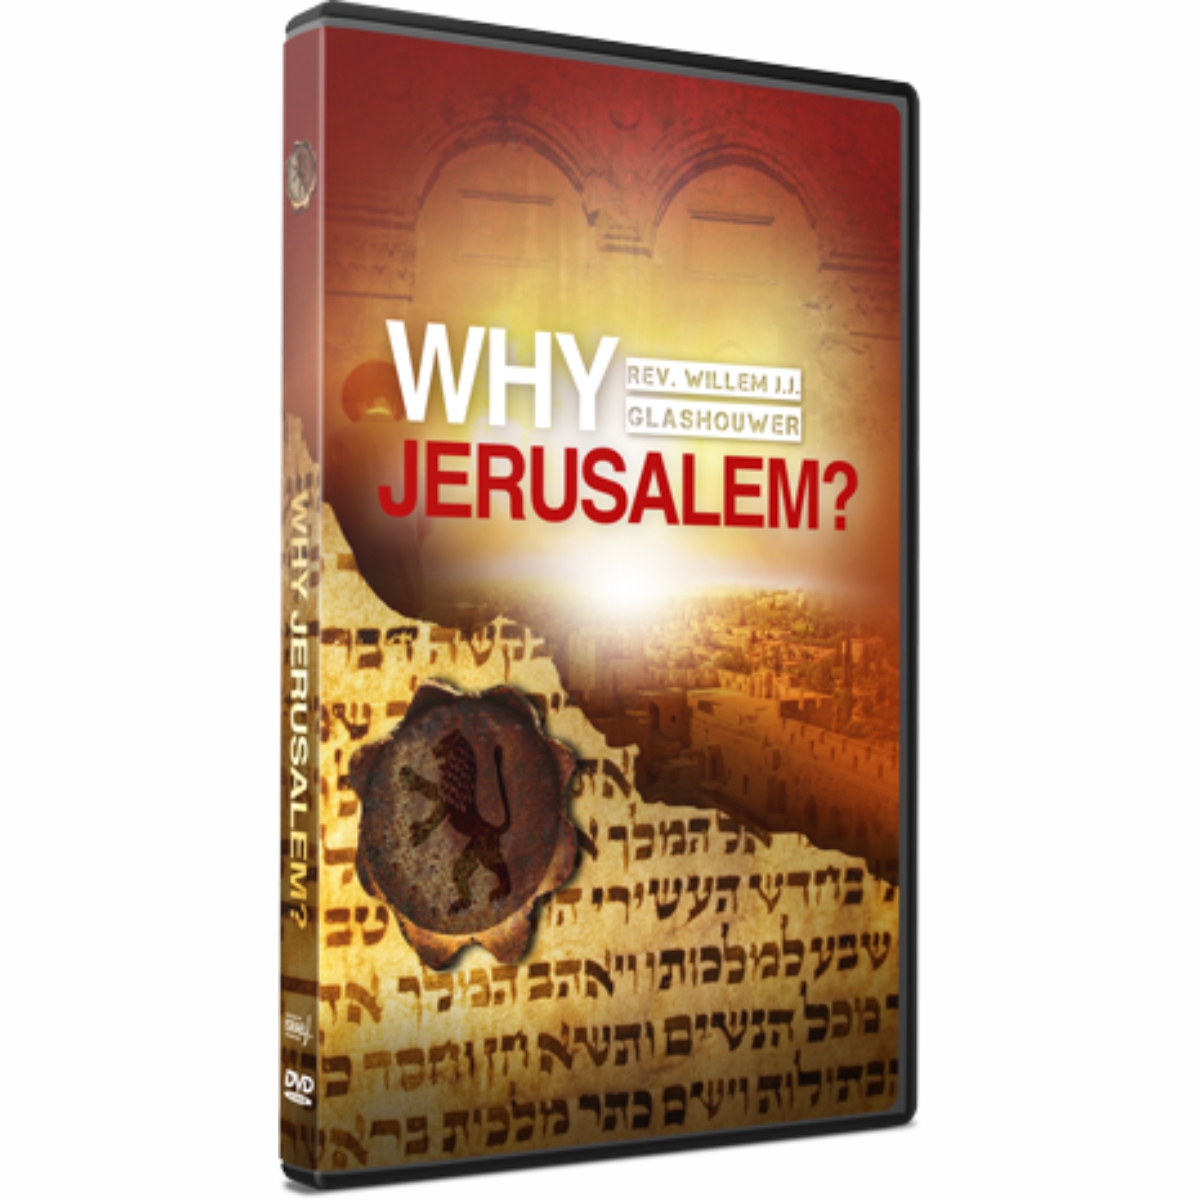 Why Jerusalem DVD Cover